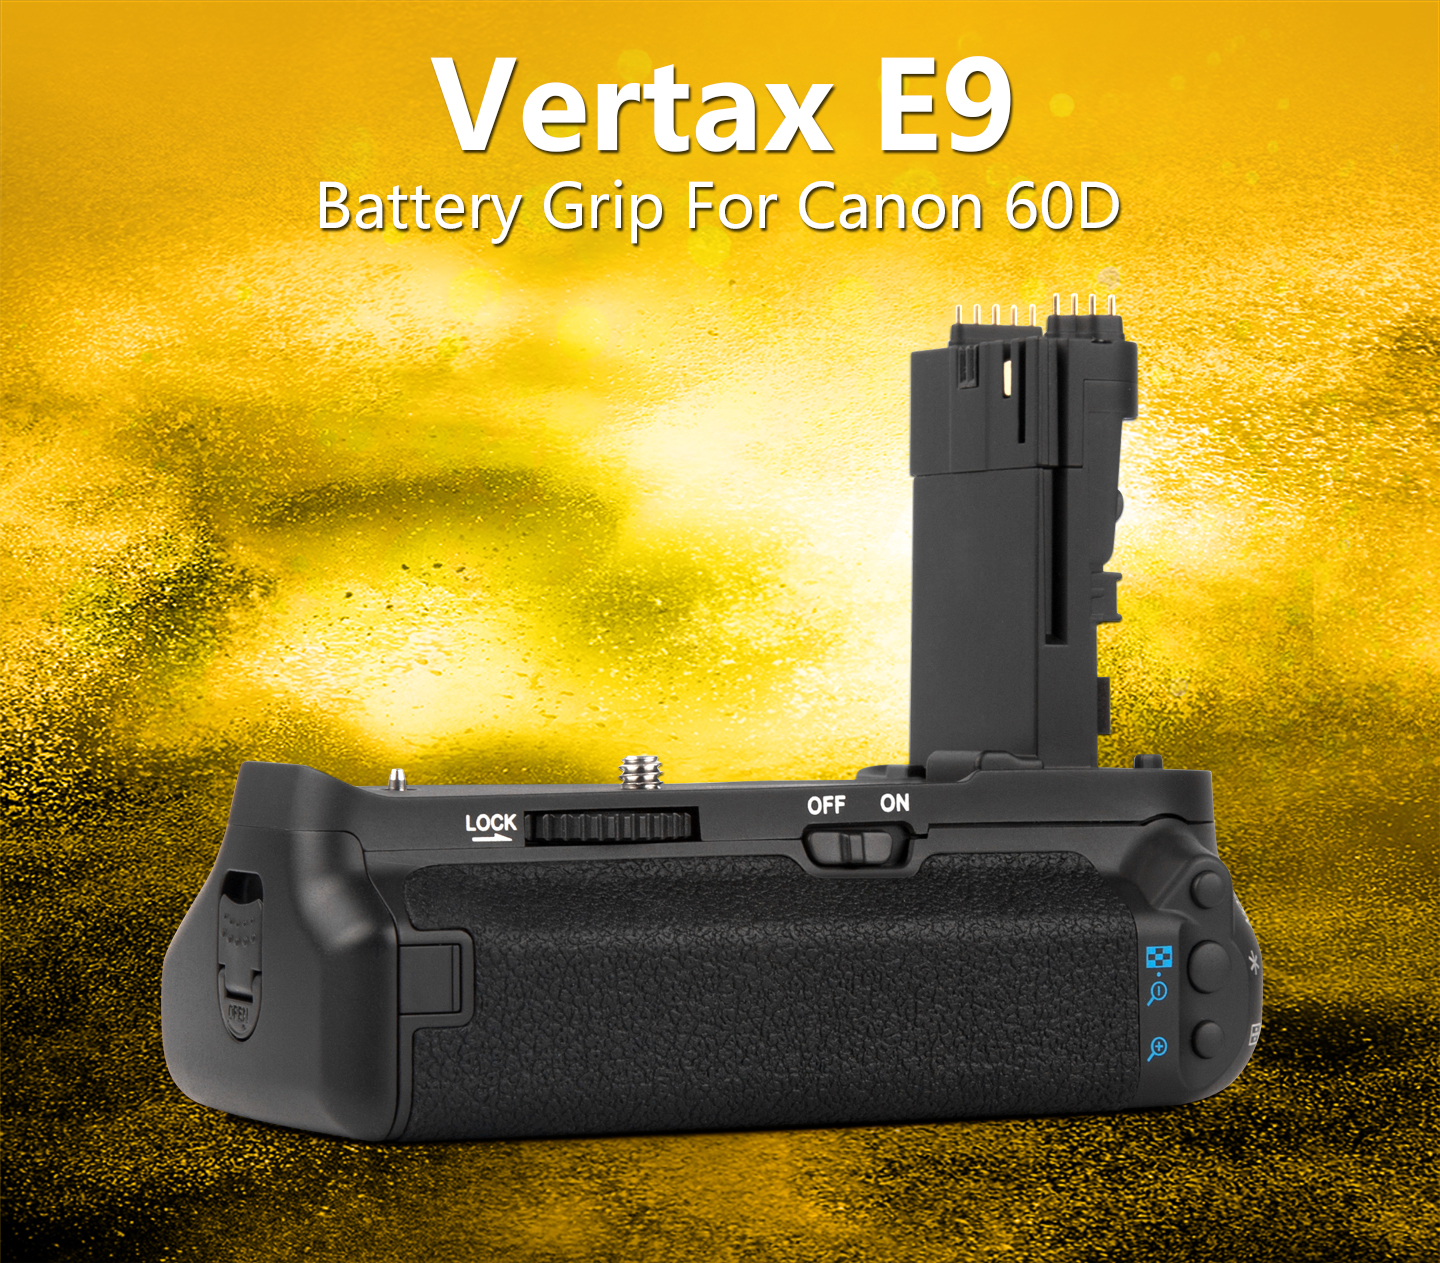 Vretax E9 Battery Grip For Canon 60D